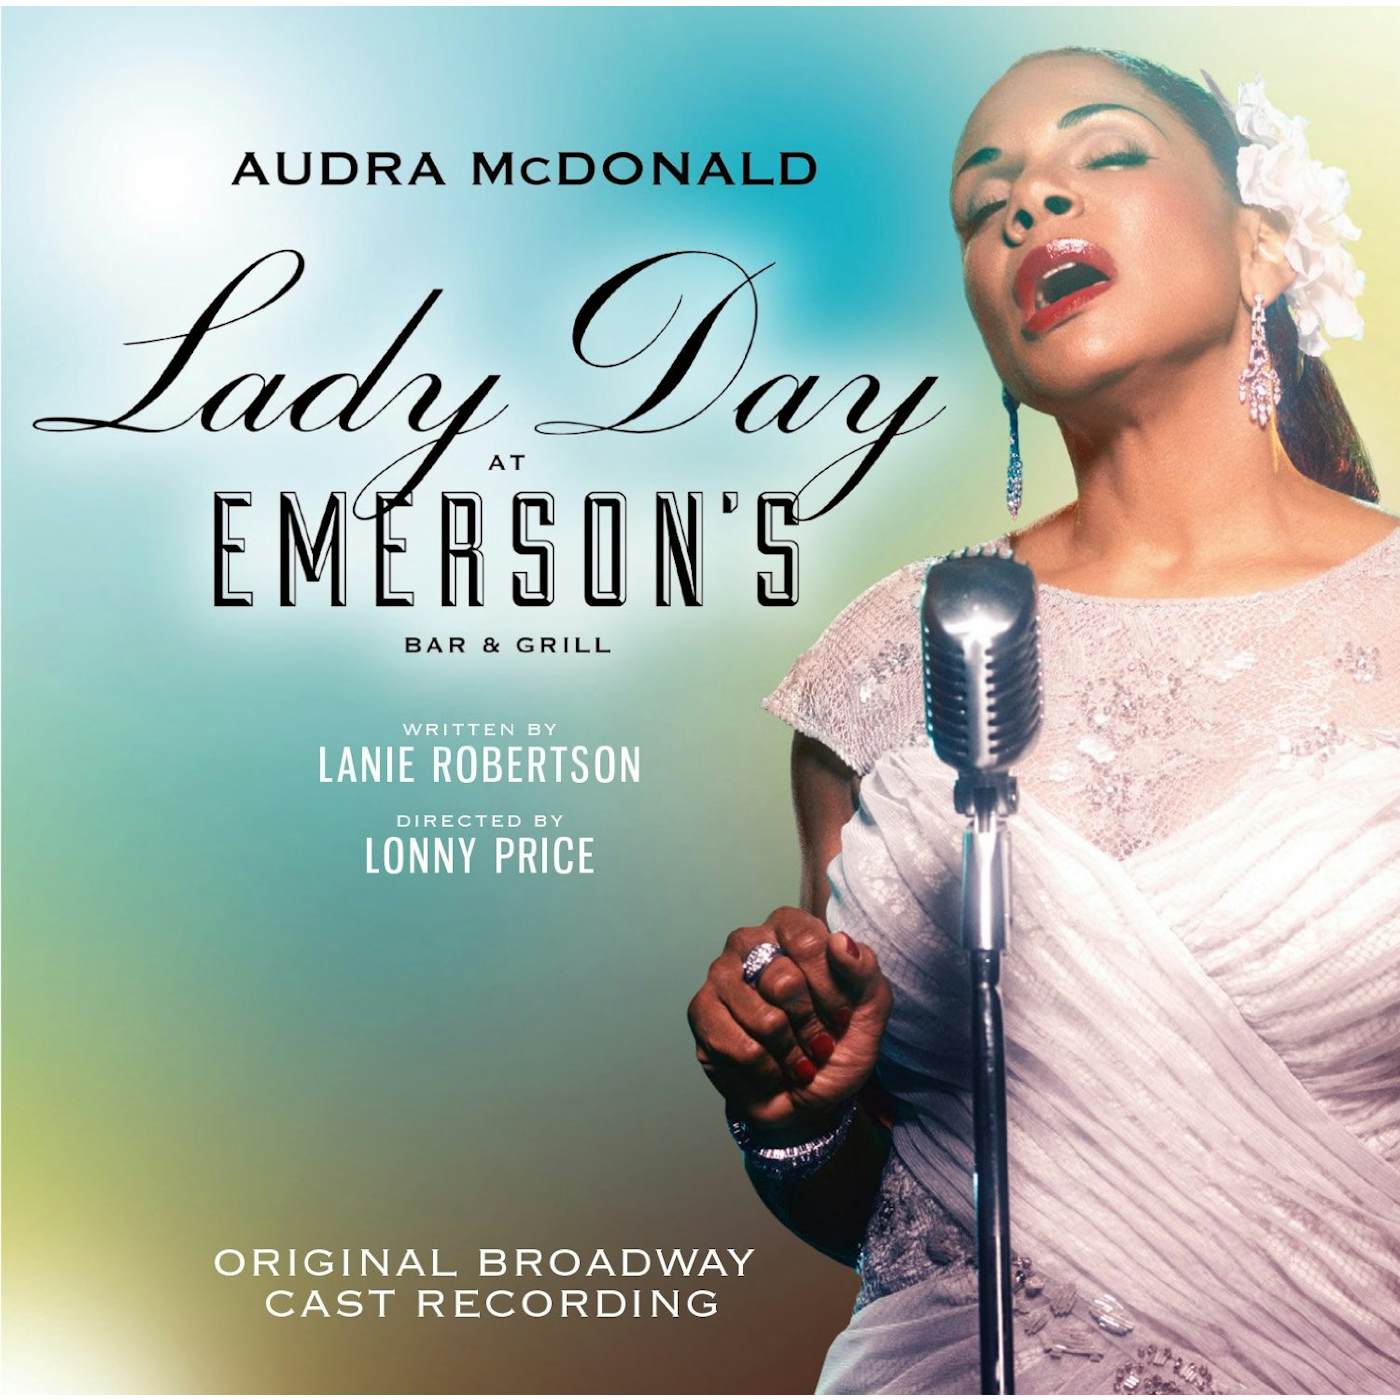 Audra McDonald LADY DAY AT EMERSON'S BAR & GRILL / O.B.C.R. CD